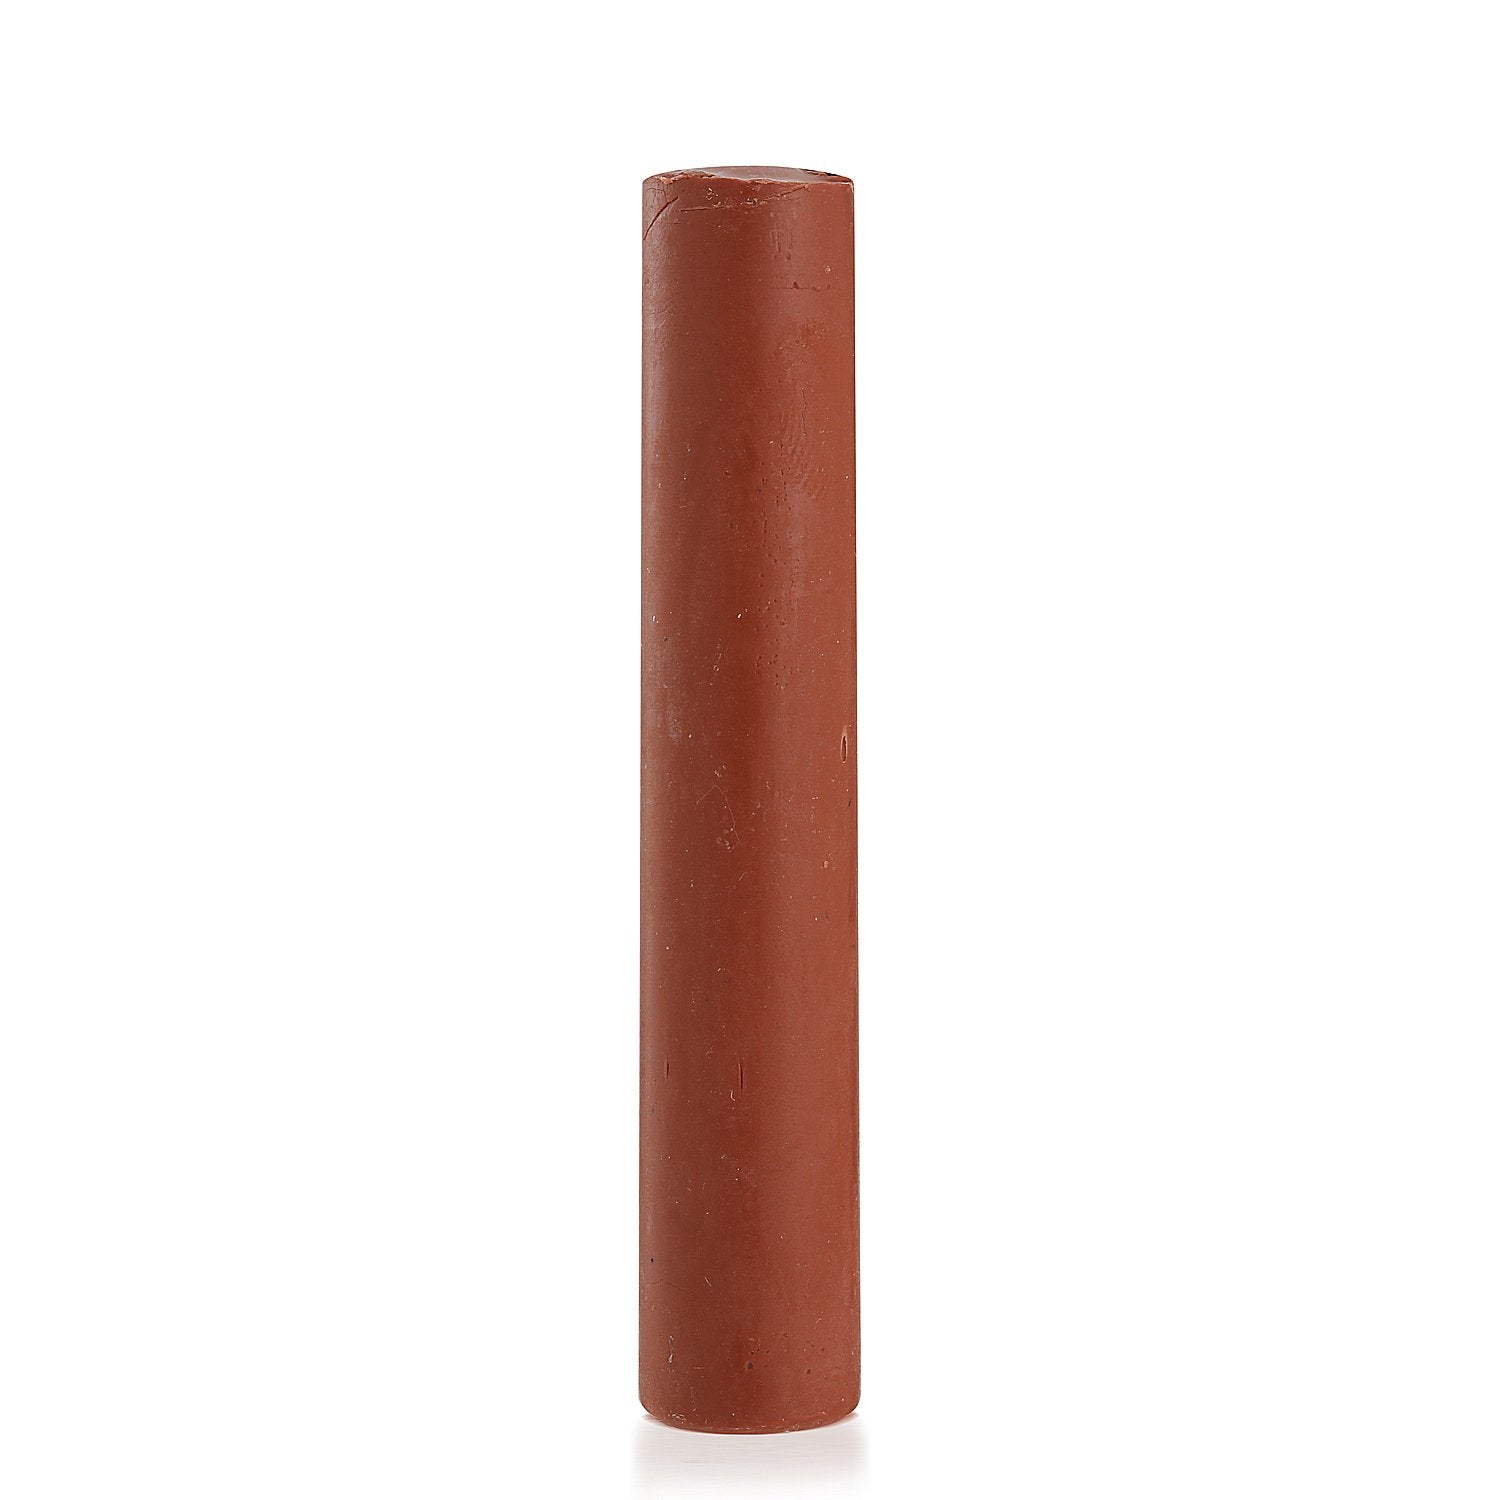 2Pce Orange Brown Beeswax Filler Sticks BFSORANGE2 by Gilly's